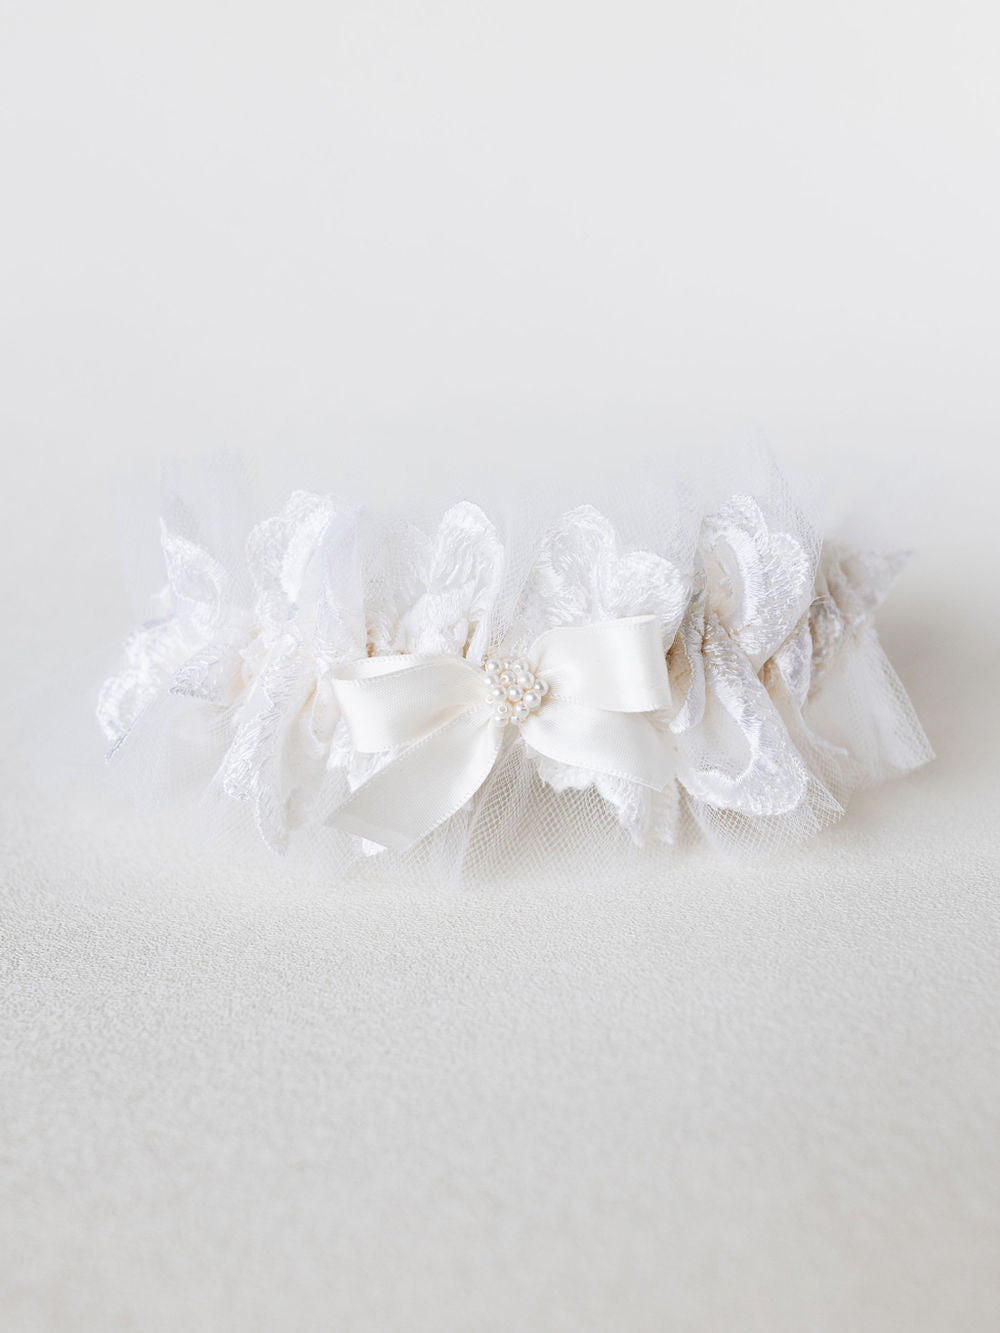 custom pearls and ivory tulle wedding garter heirloom made from mother's wedding veil handmade by The Garter Girl